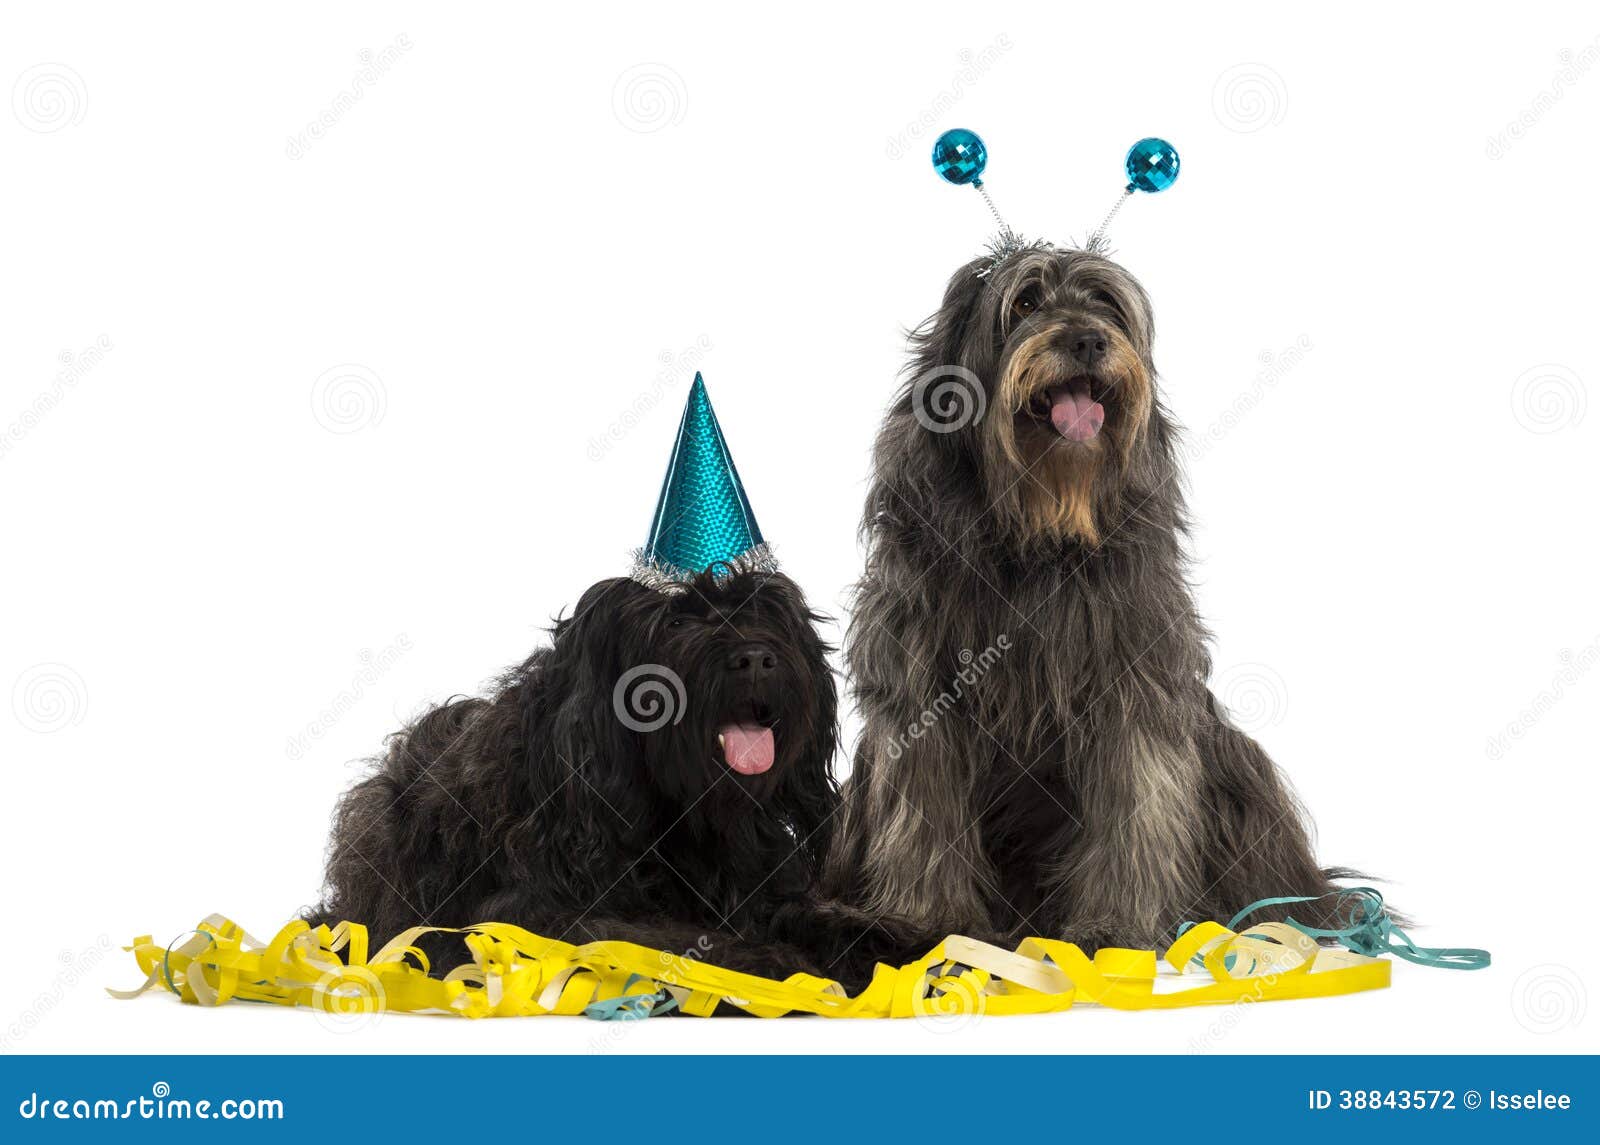 catalan sheepdogs wearing party hats, panting,